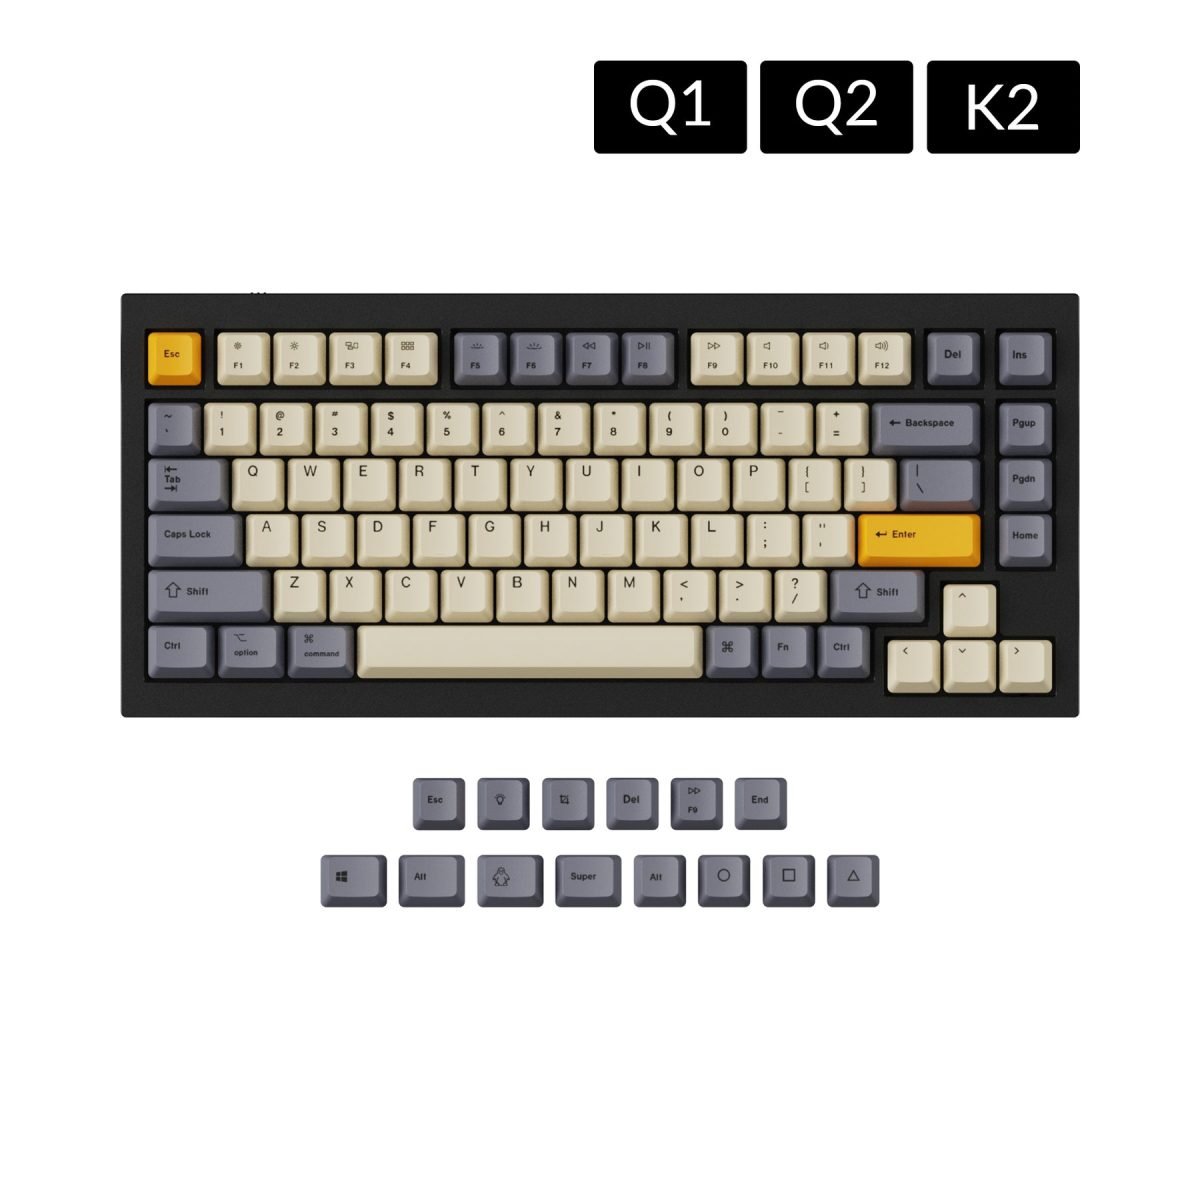 oem profile dye sub pbt keycap set for q1 q2 k2